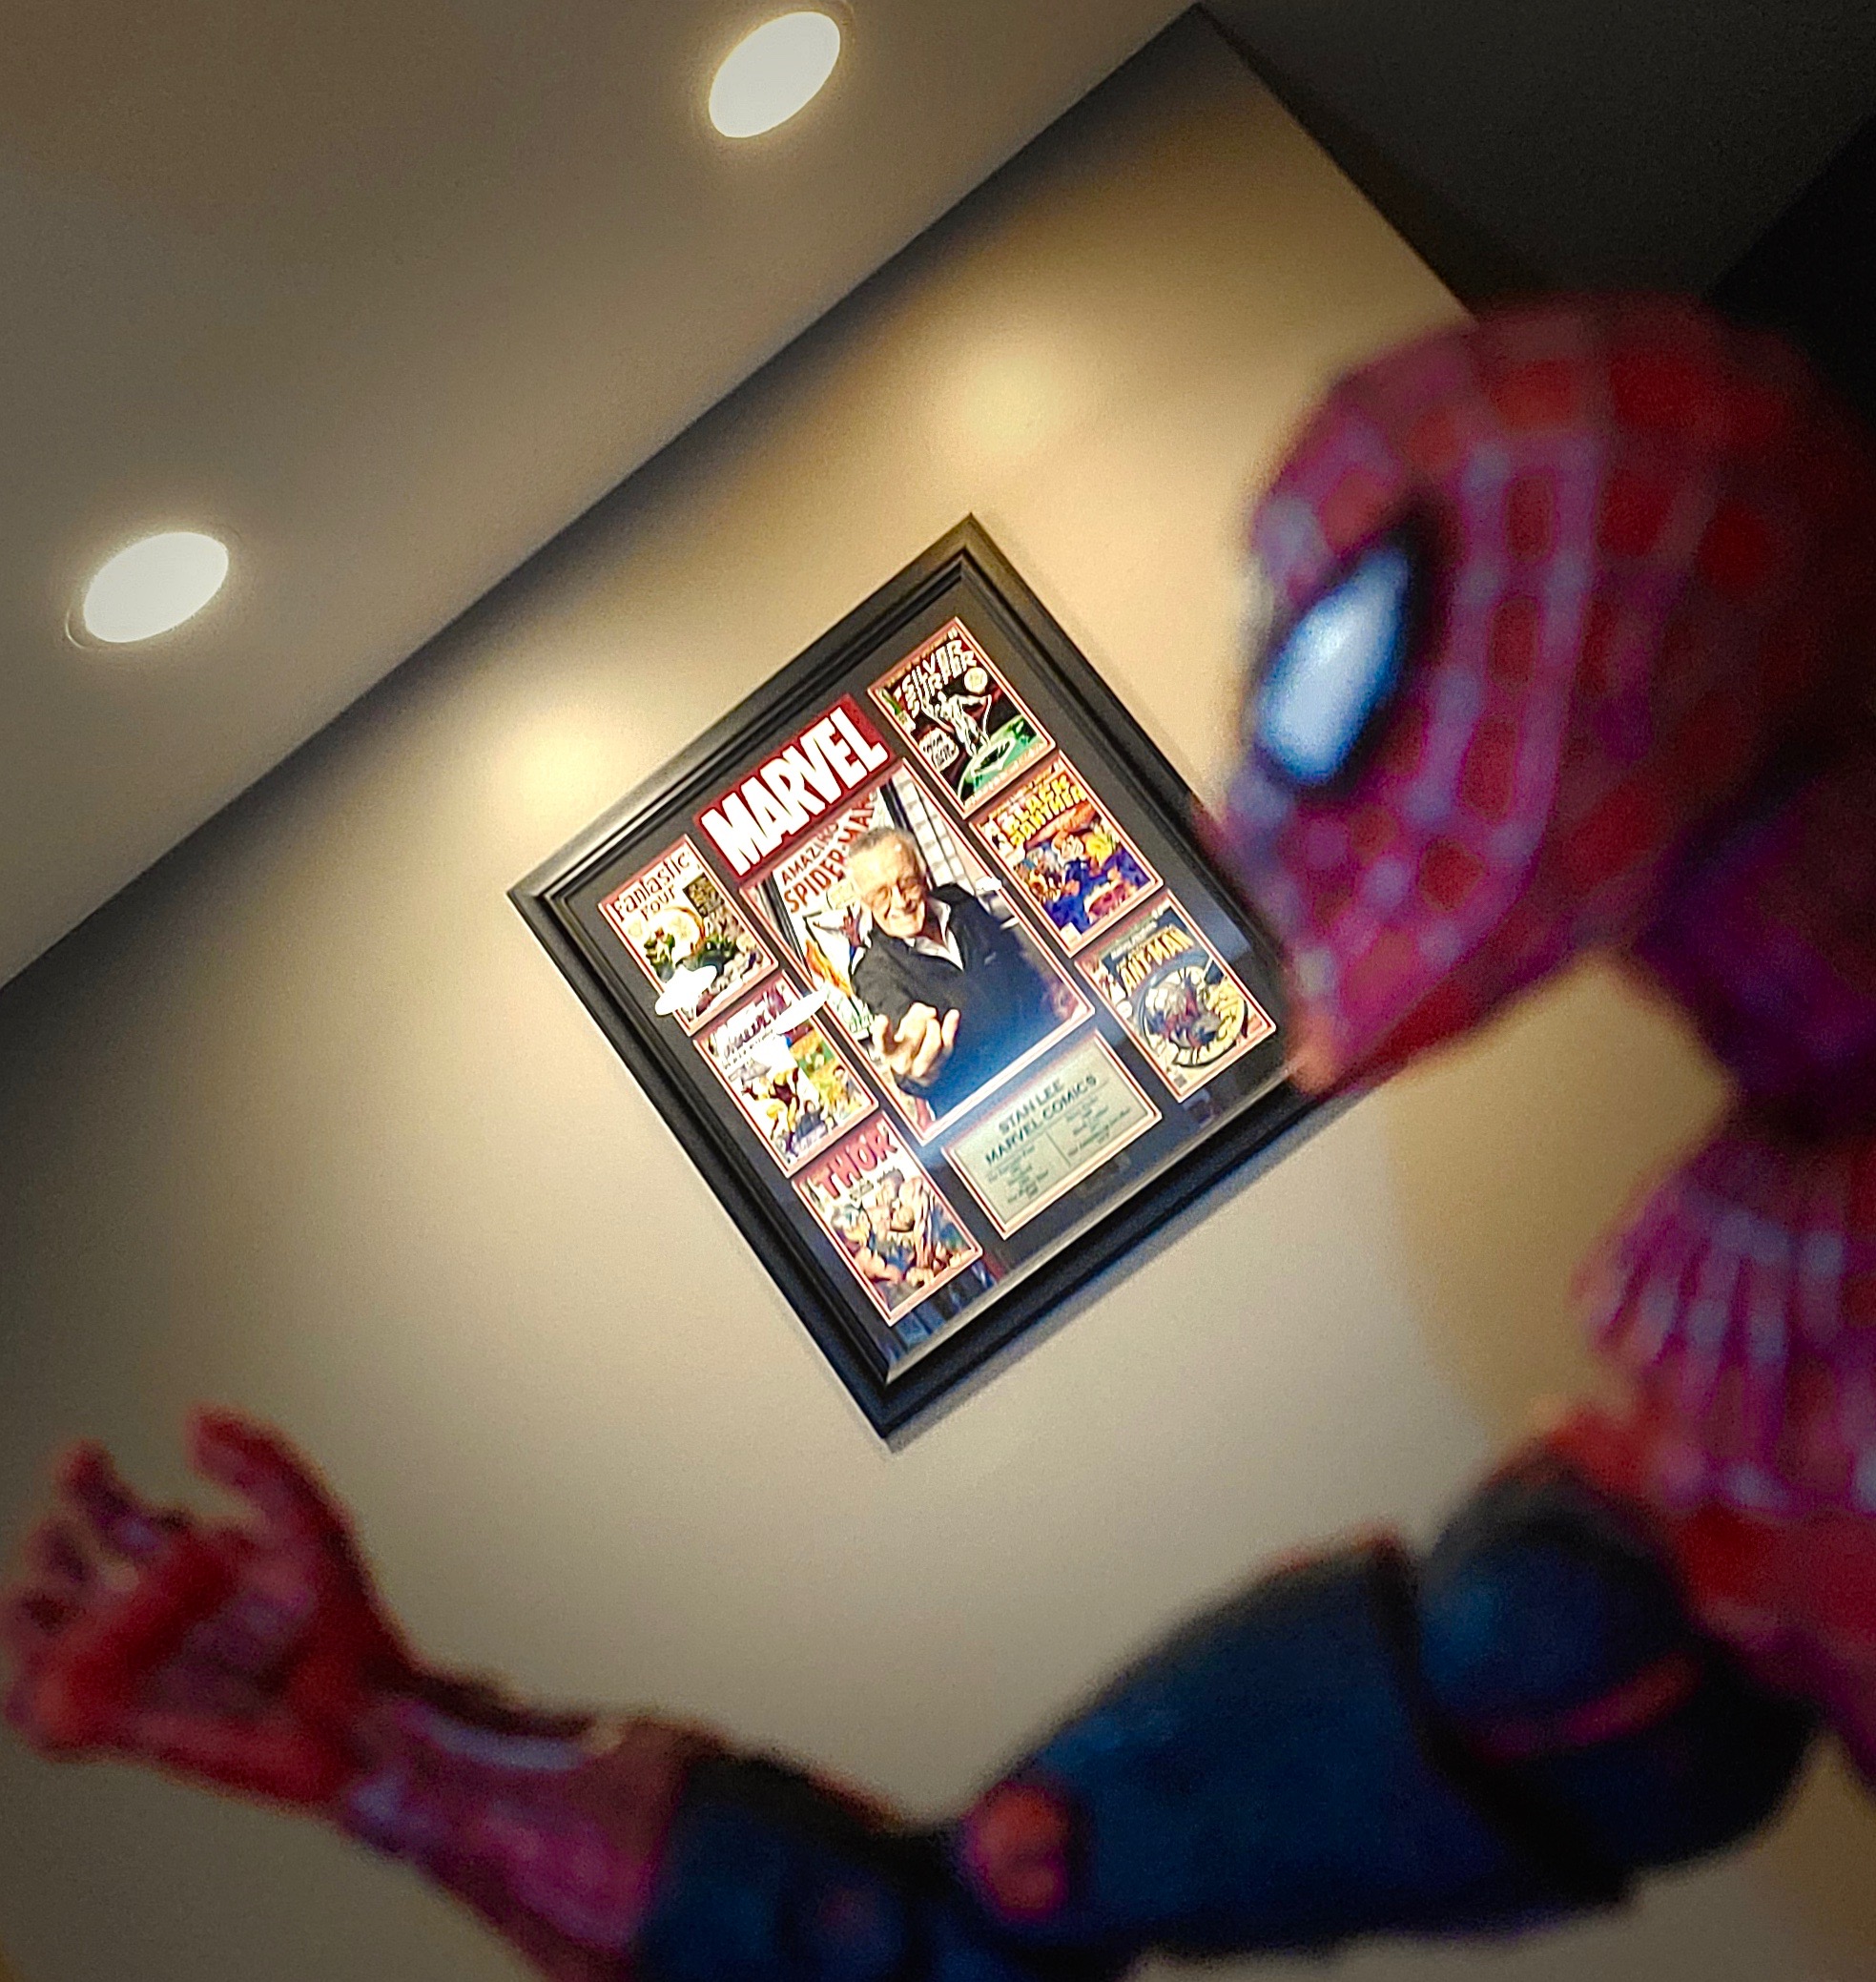 Spider-Man salutes his maker, Stan Lee.